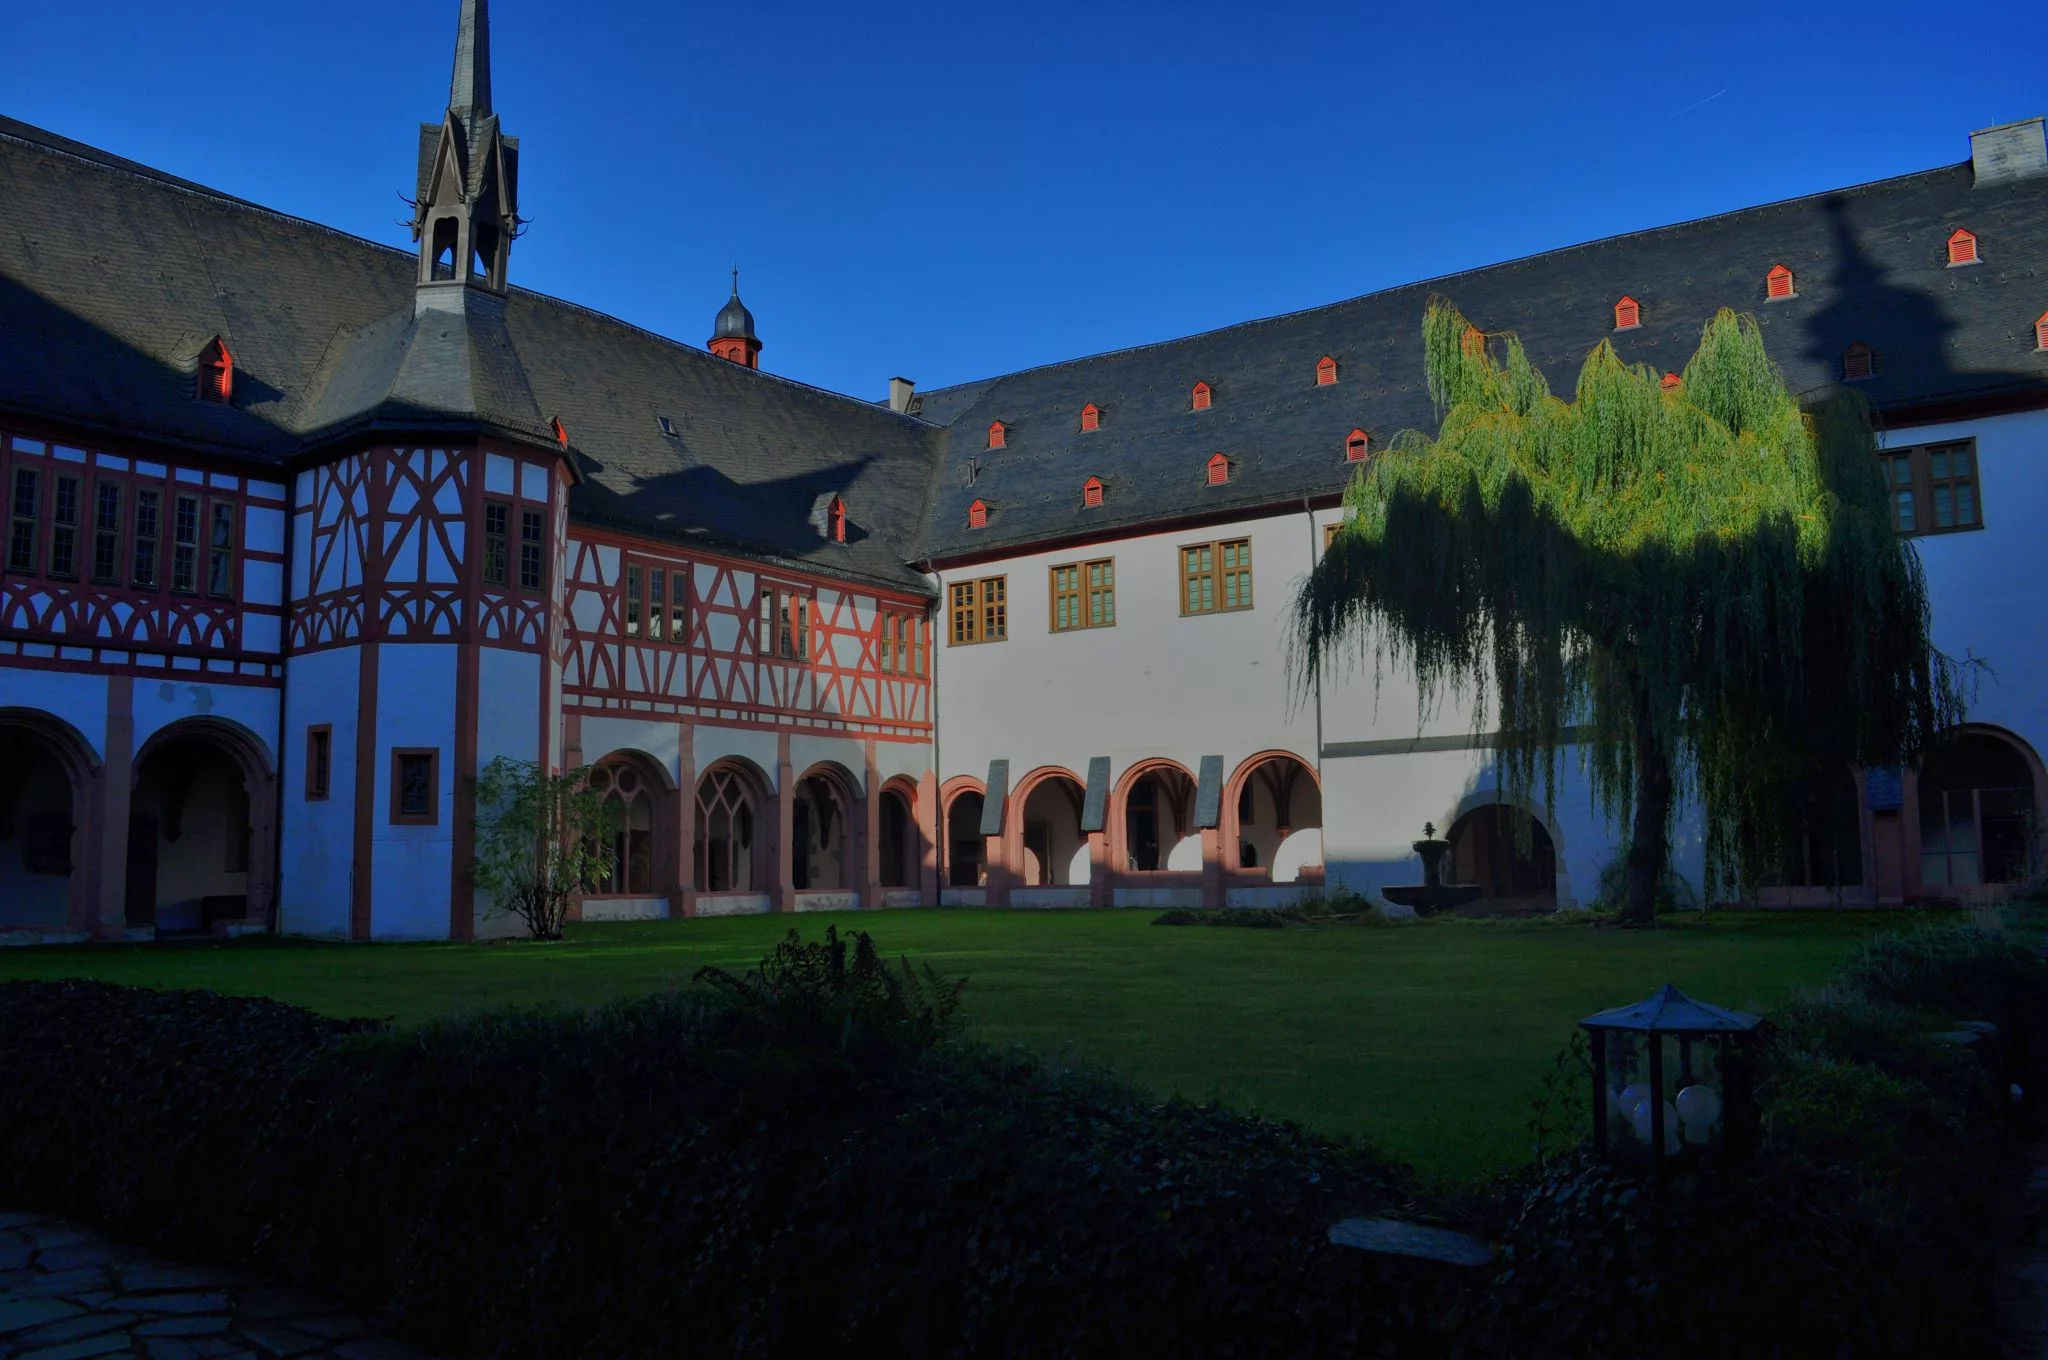 Kloster Eberbach, Germany